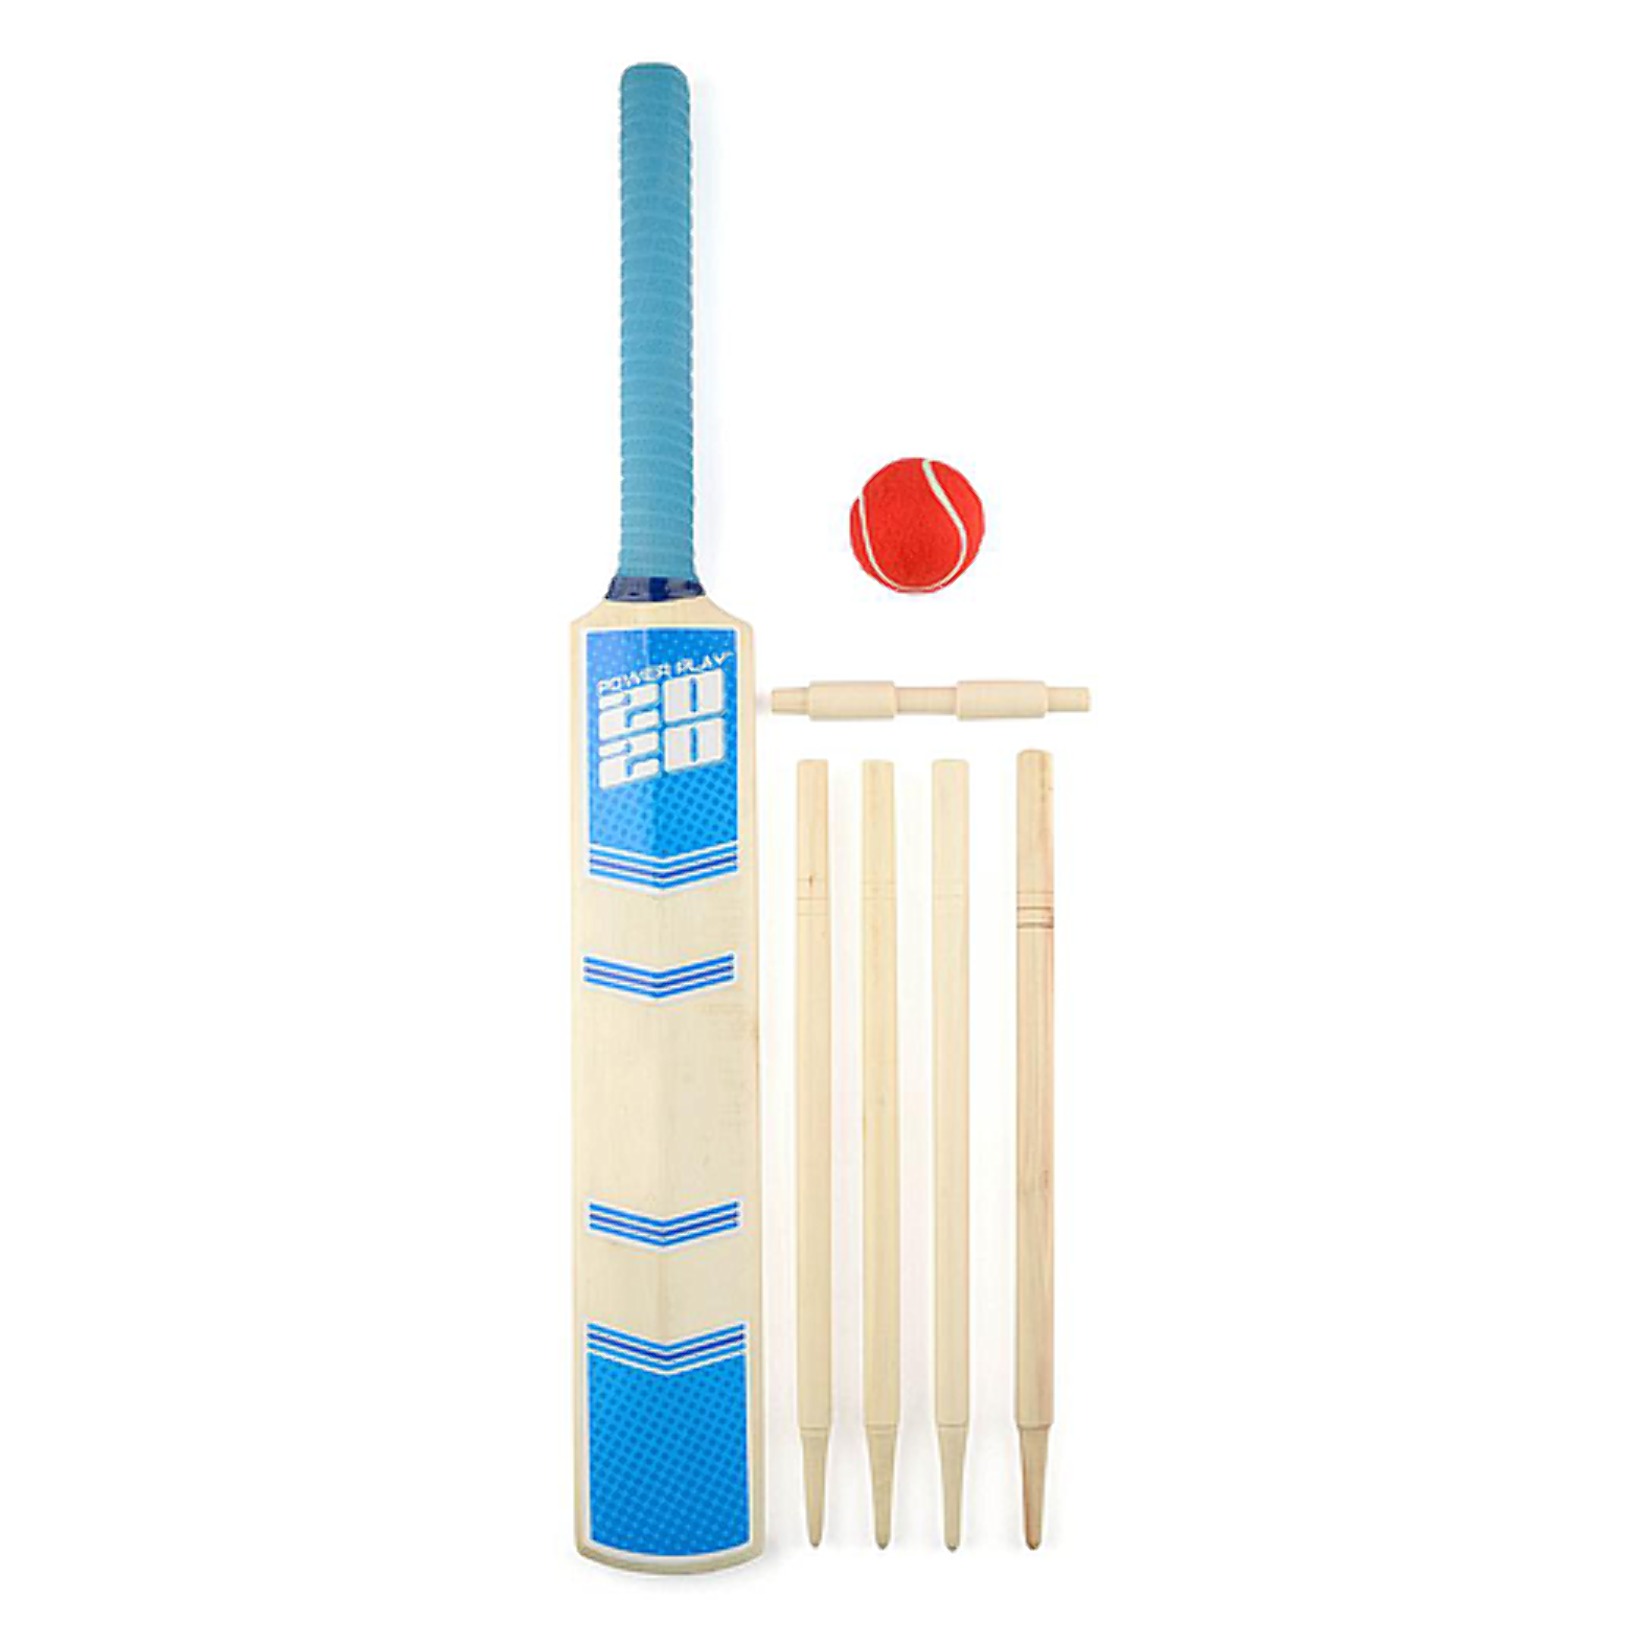 Powerplay 2020 Deluxe Size 3 Cricket Set